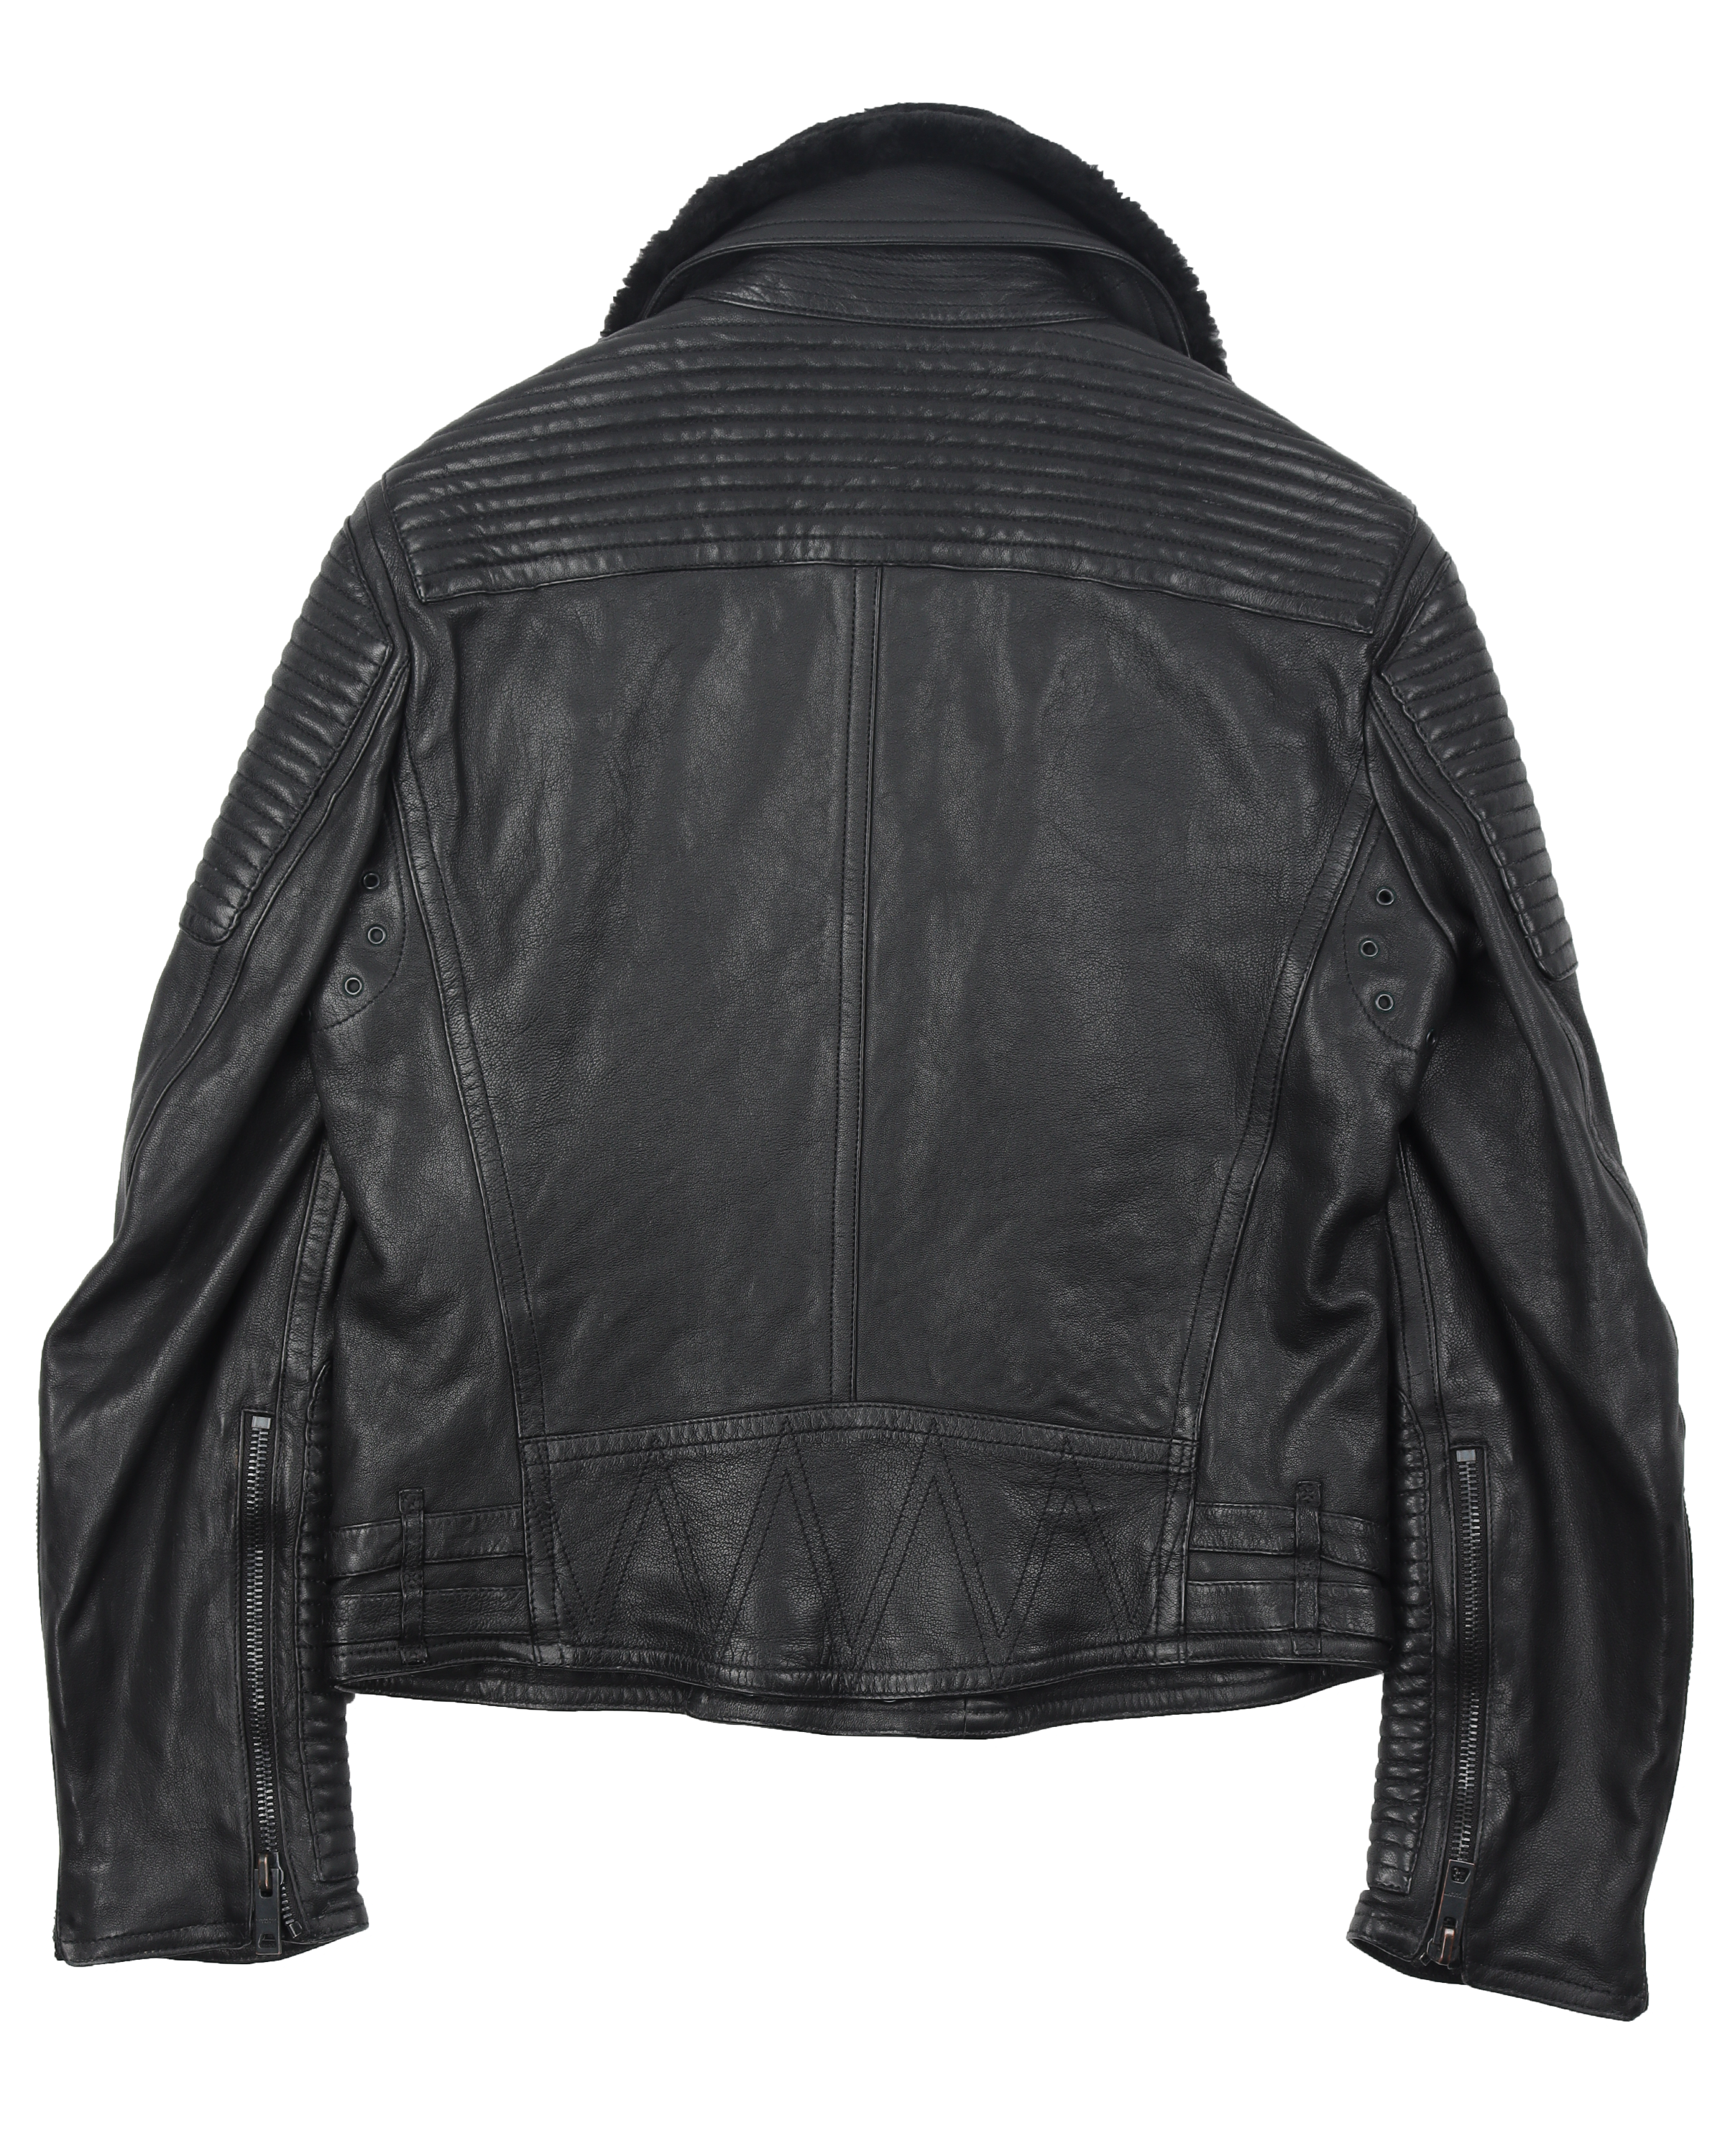 Lamb Leather Motorcycle Jacket